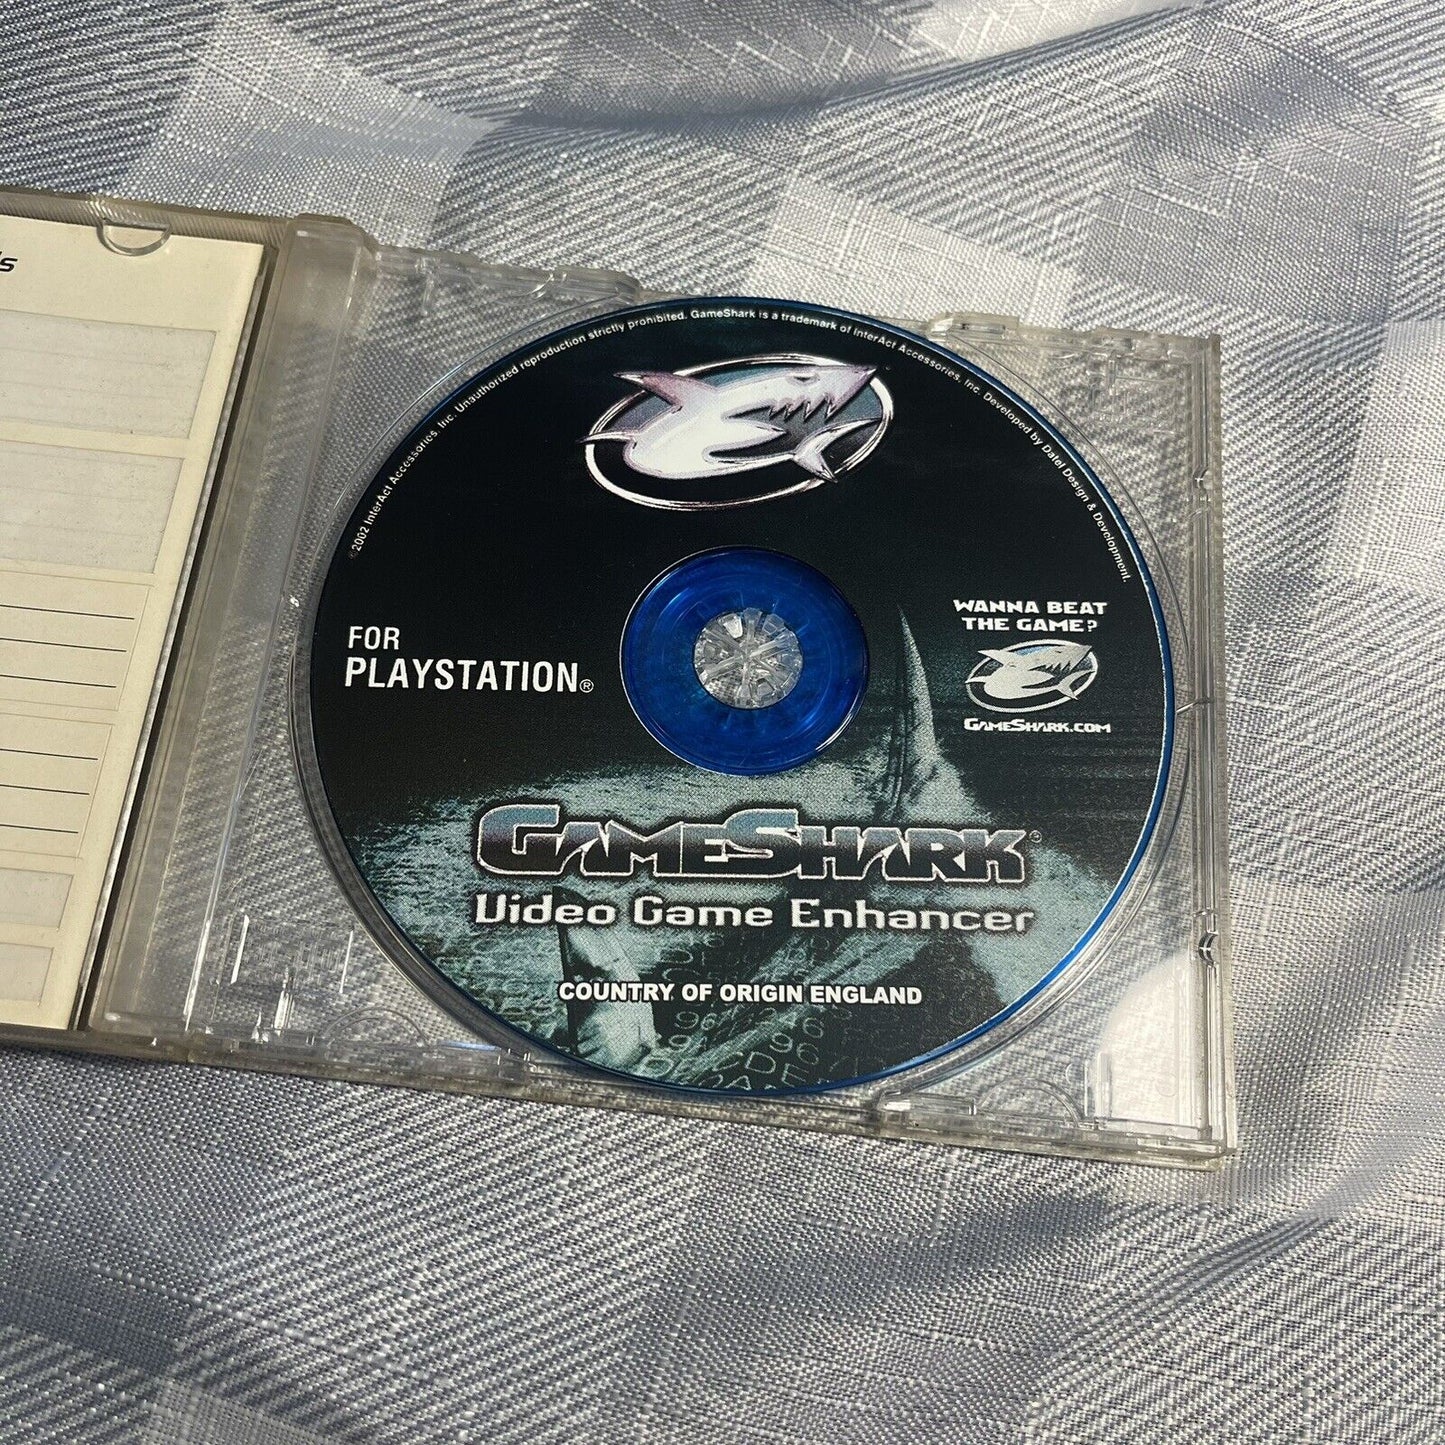 GameShark Video Game Enhancer (PS1, 2002) Disc Only